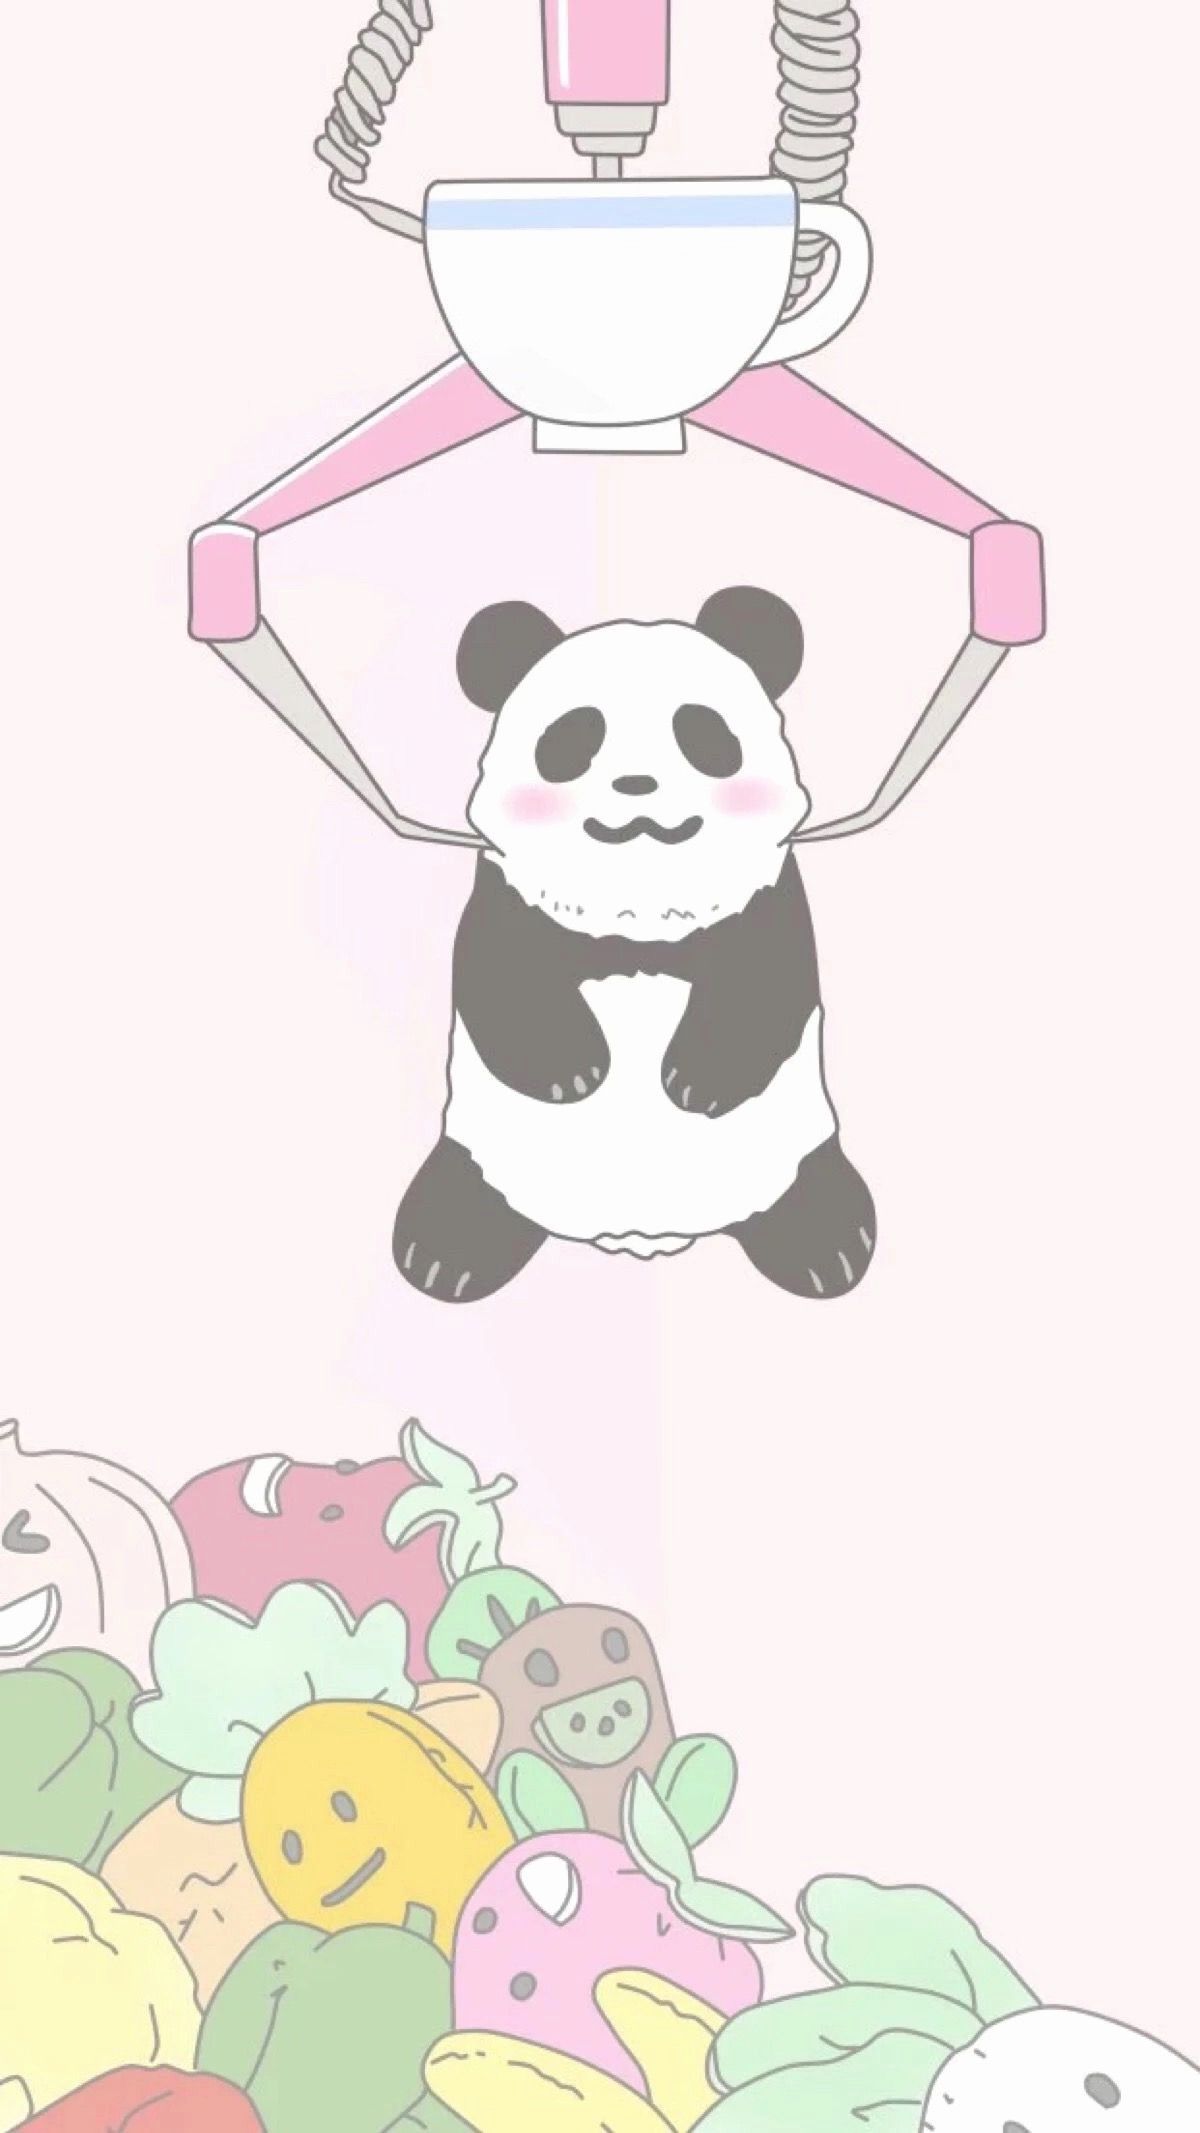 Panda Wallpaper iPhone